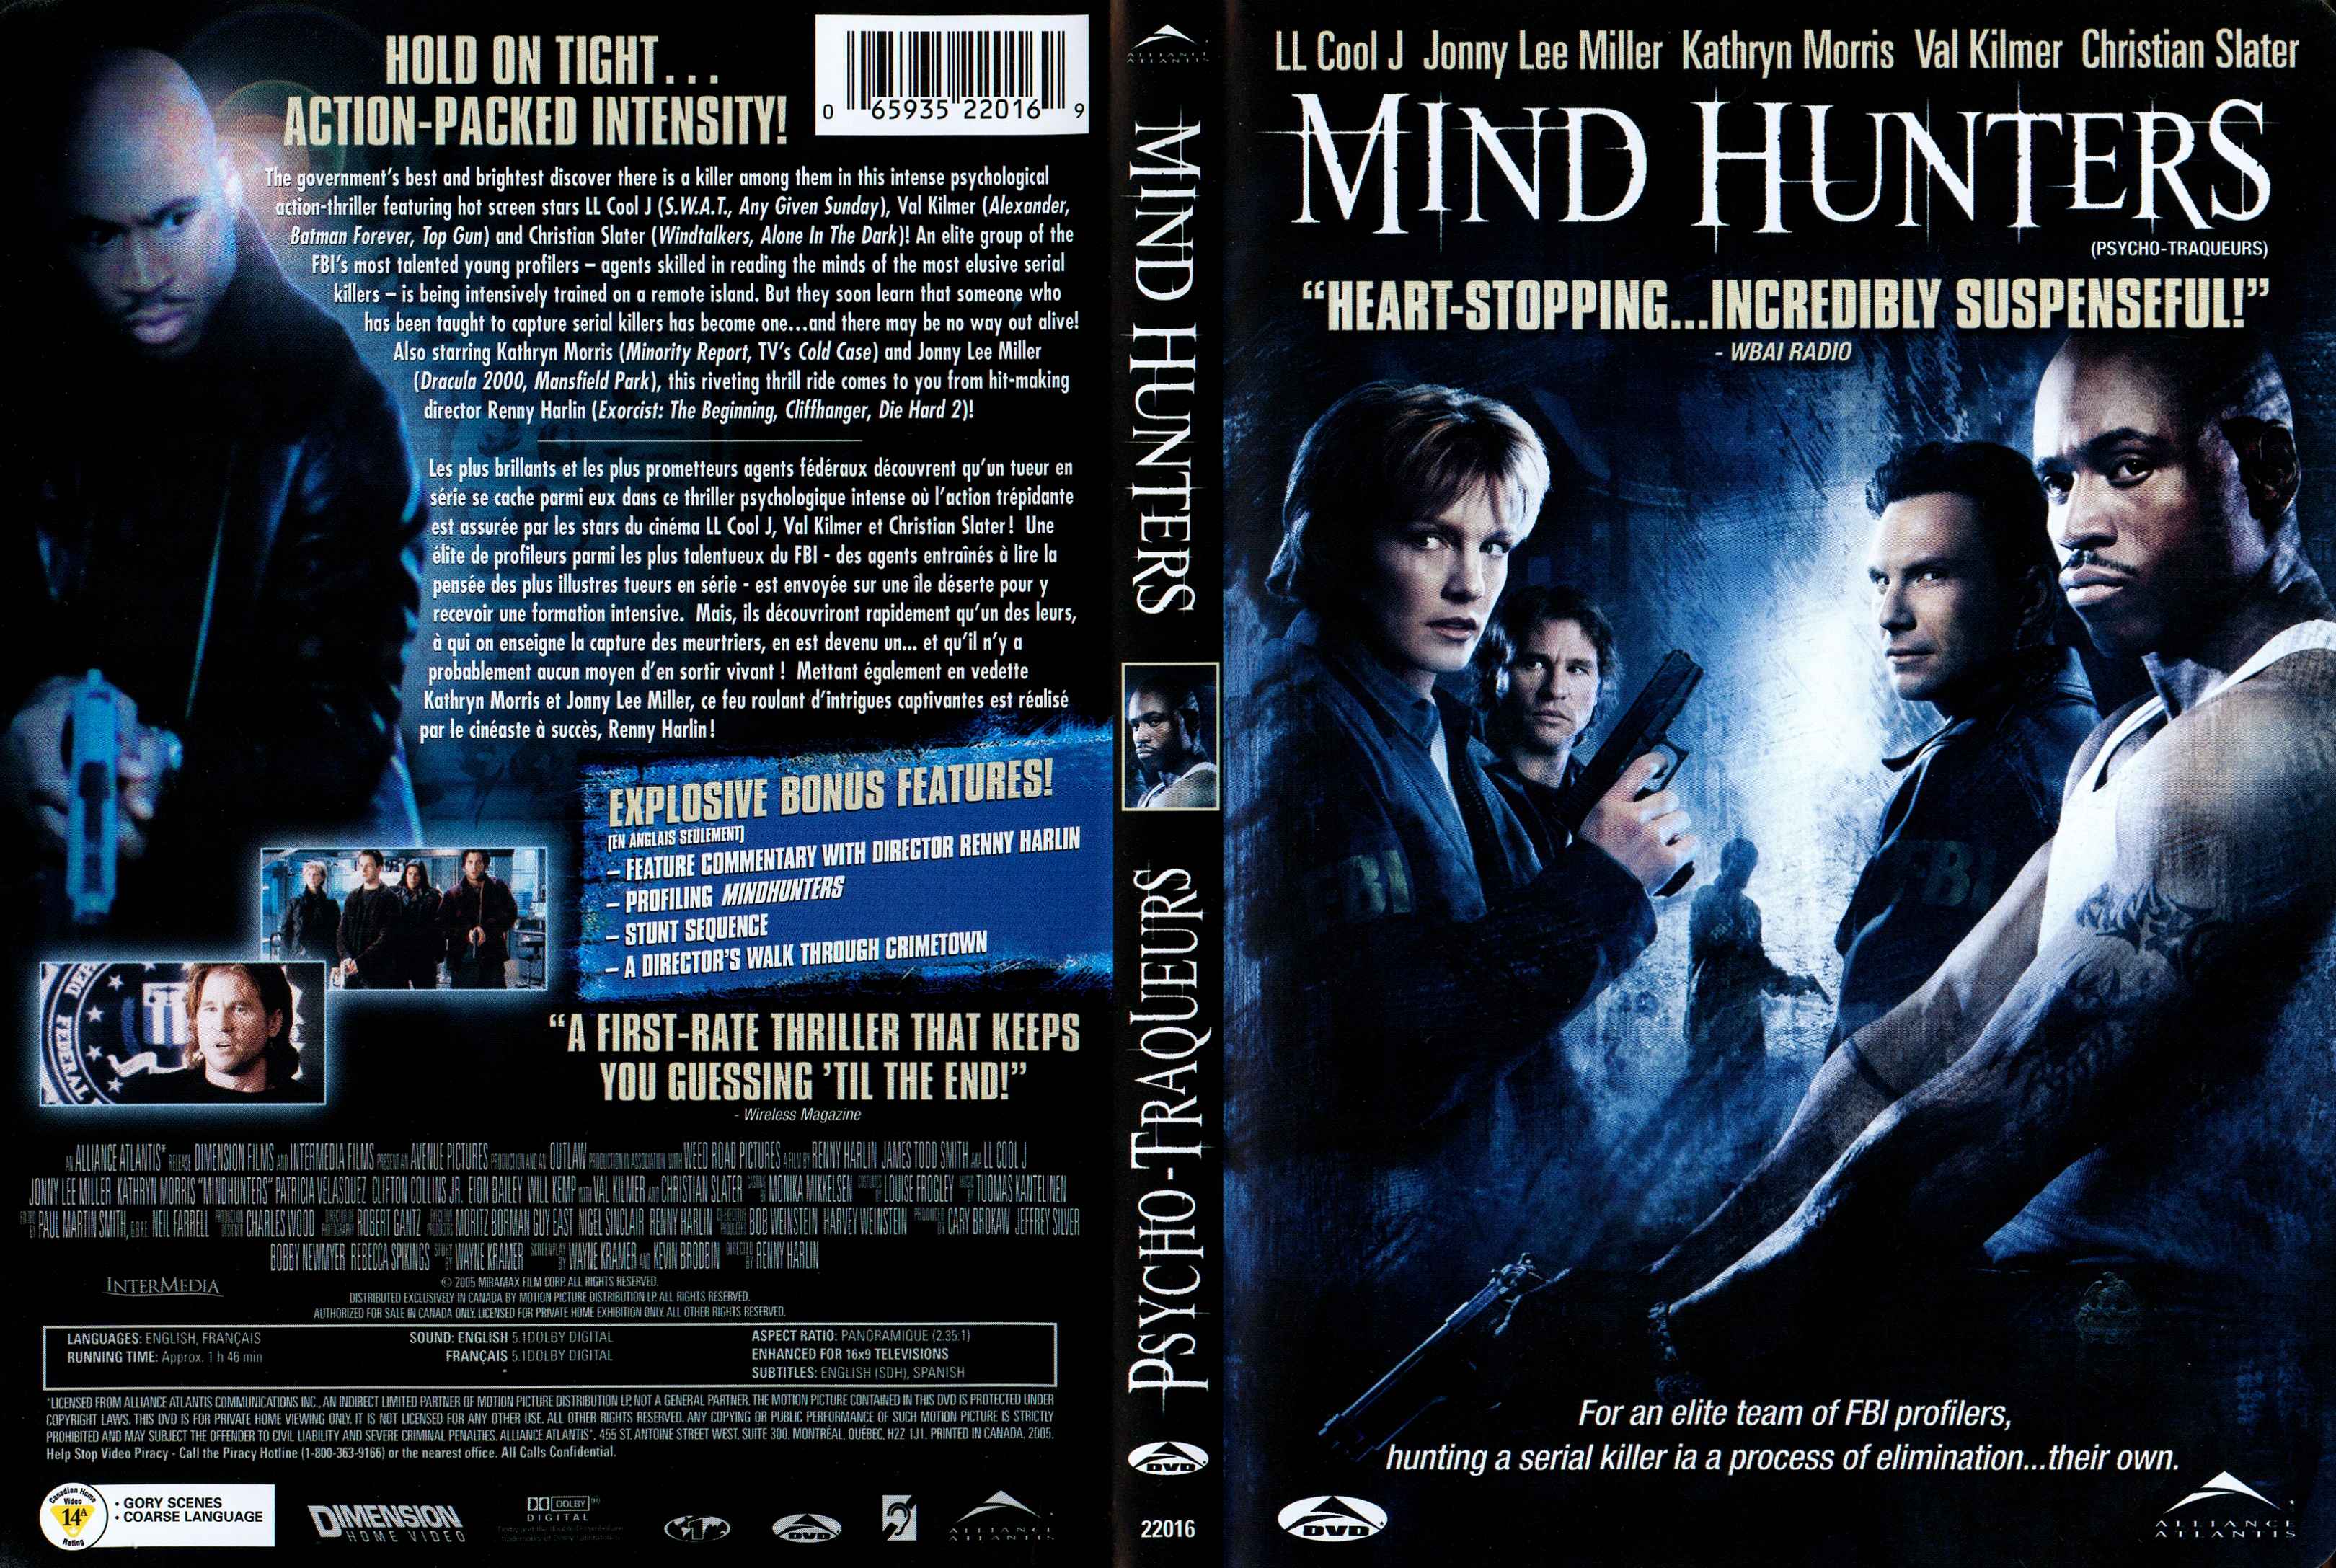 Jaquette DVD Mind hunters